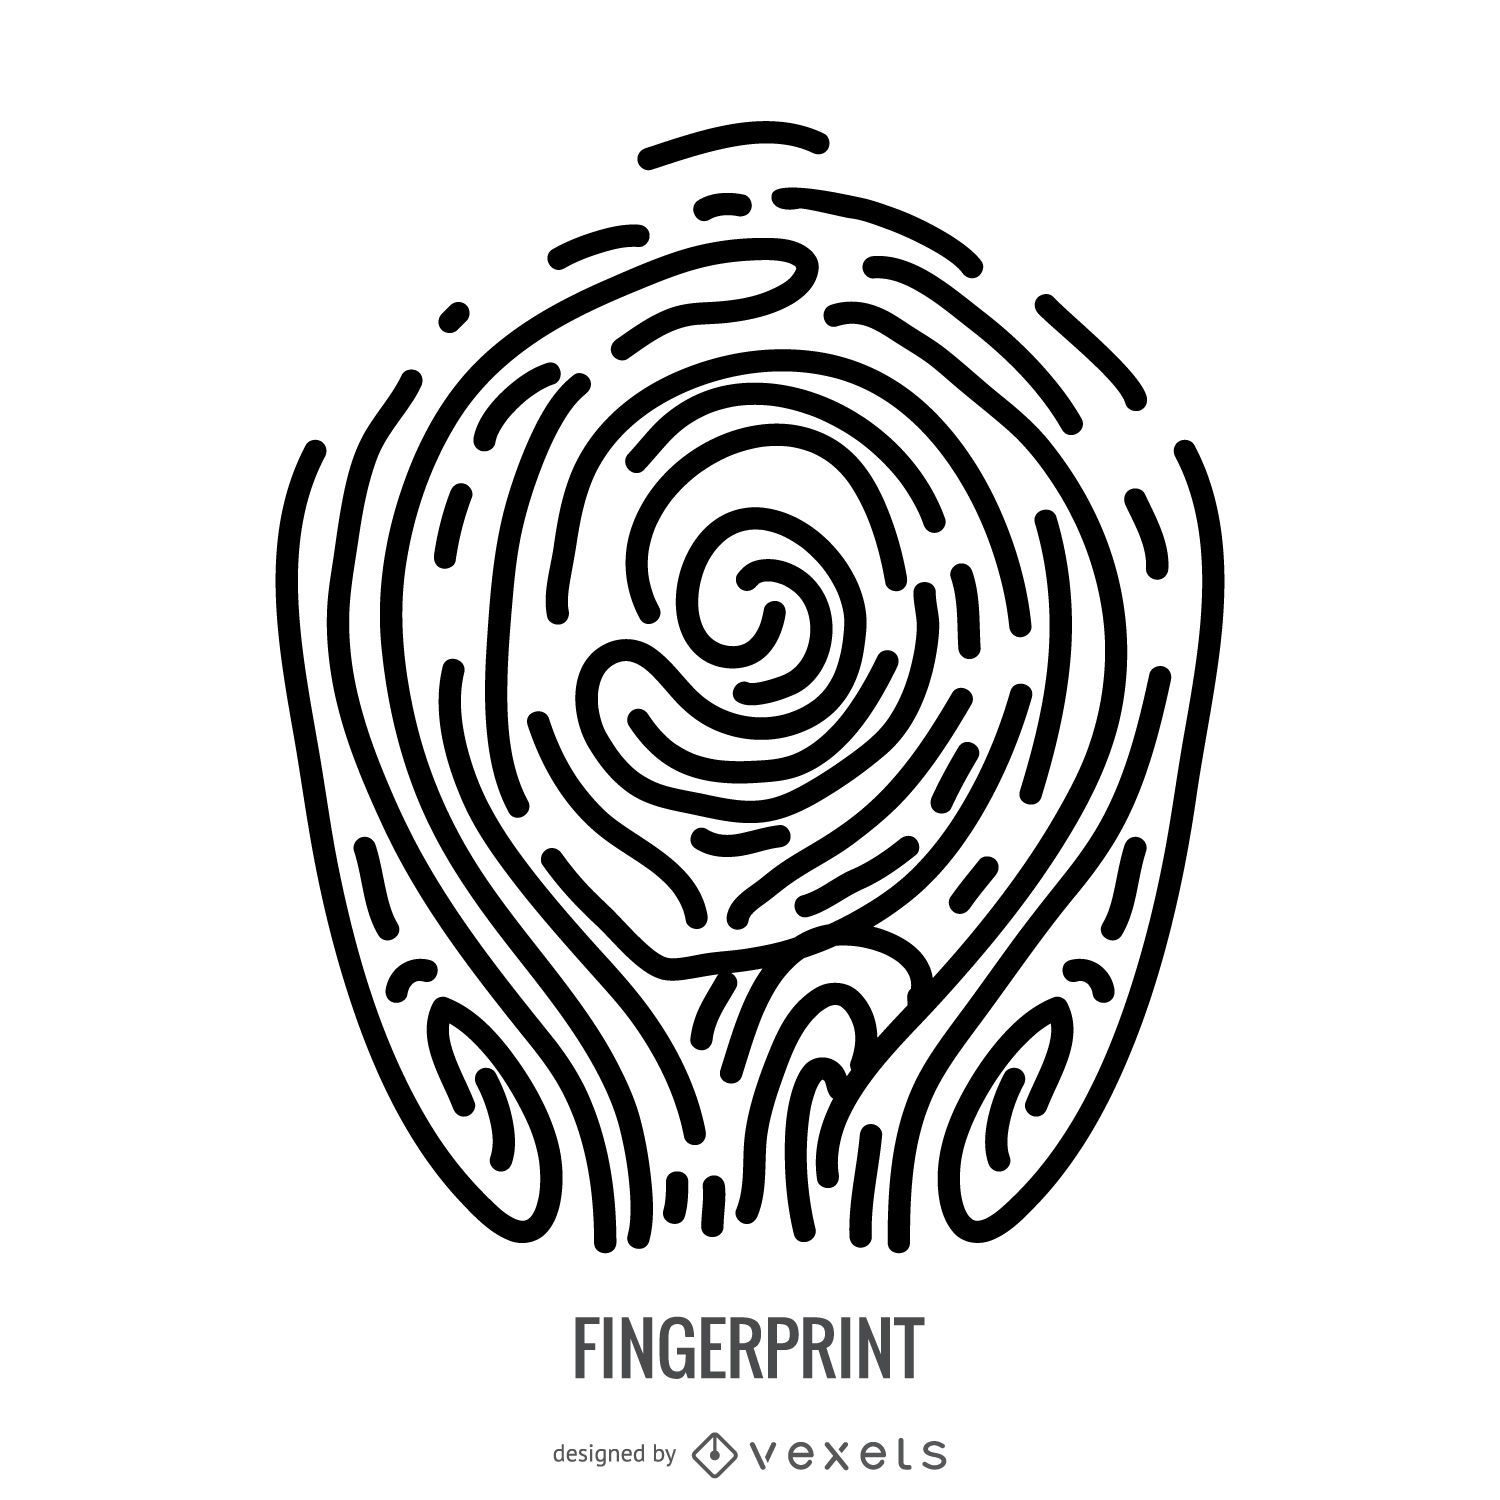 Abstract fingerprint illustration